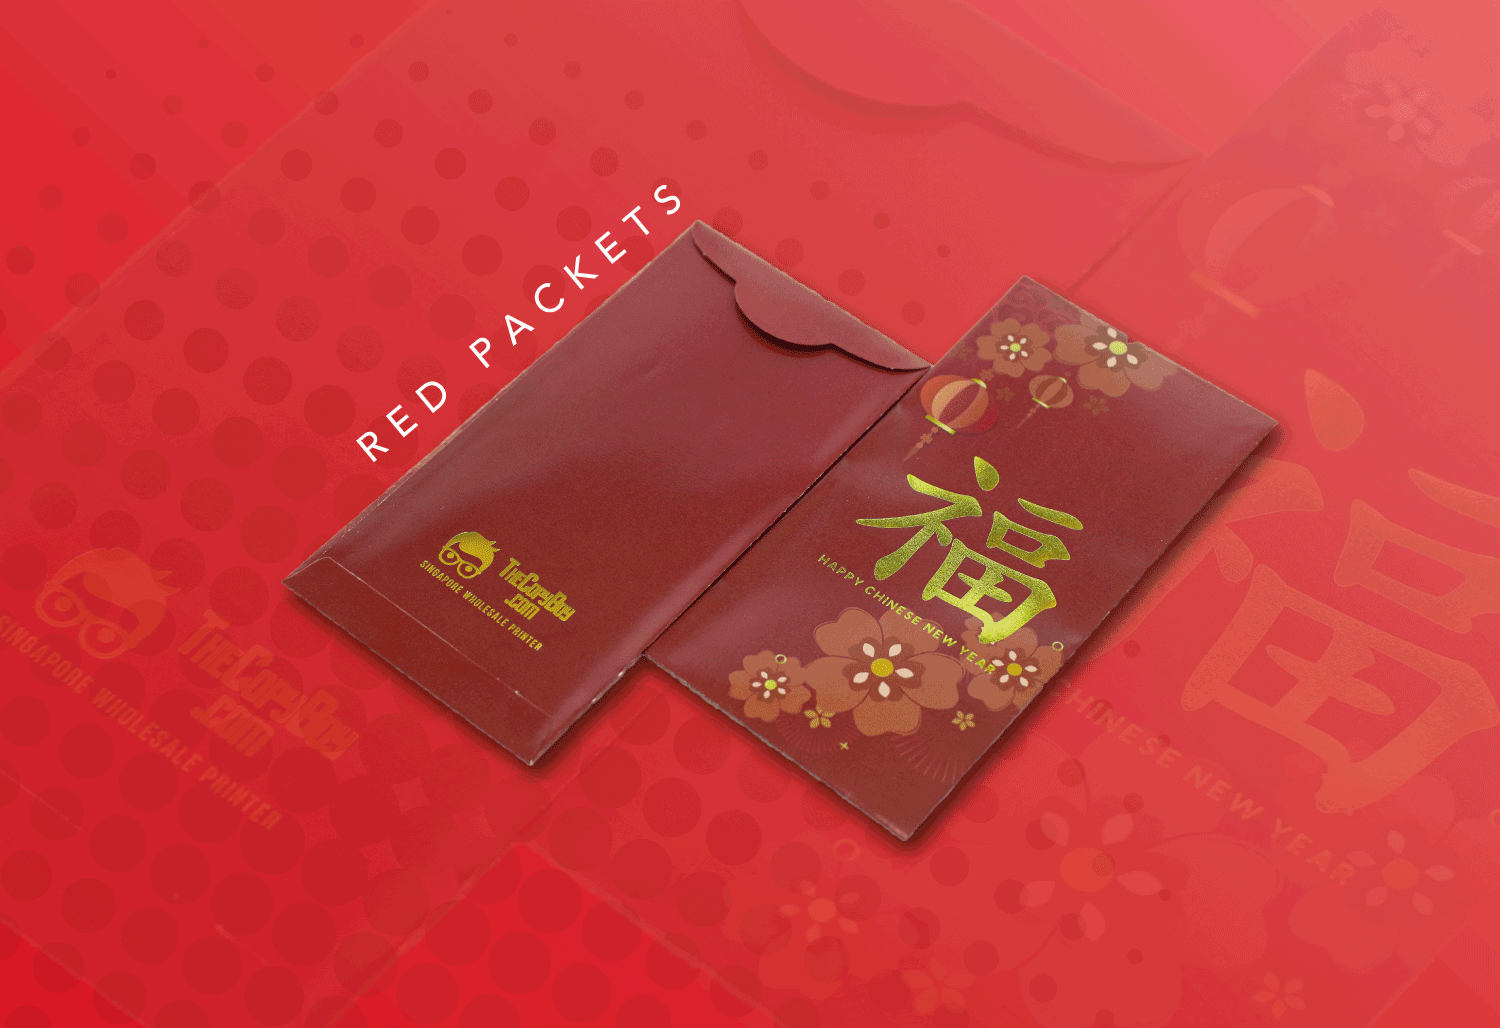 Red Pocket Design, Chinese Red Packet Prining